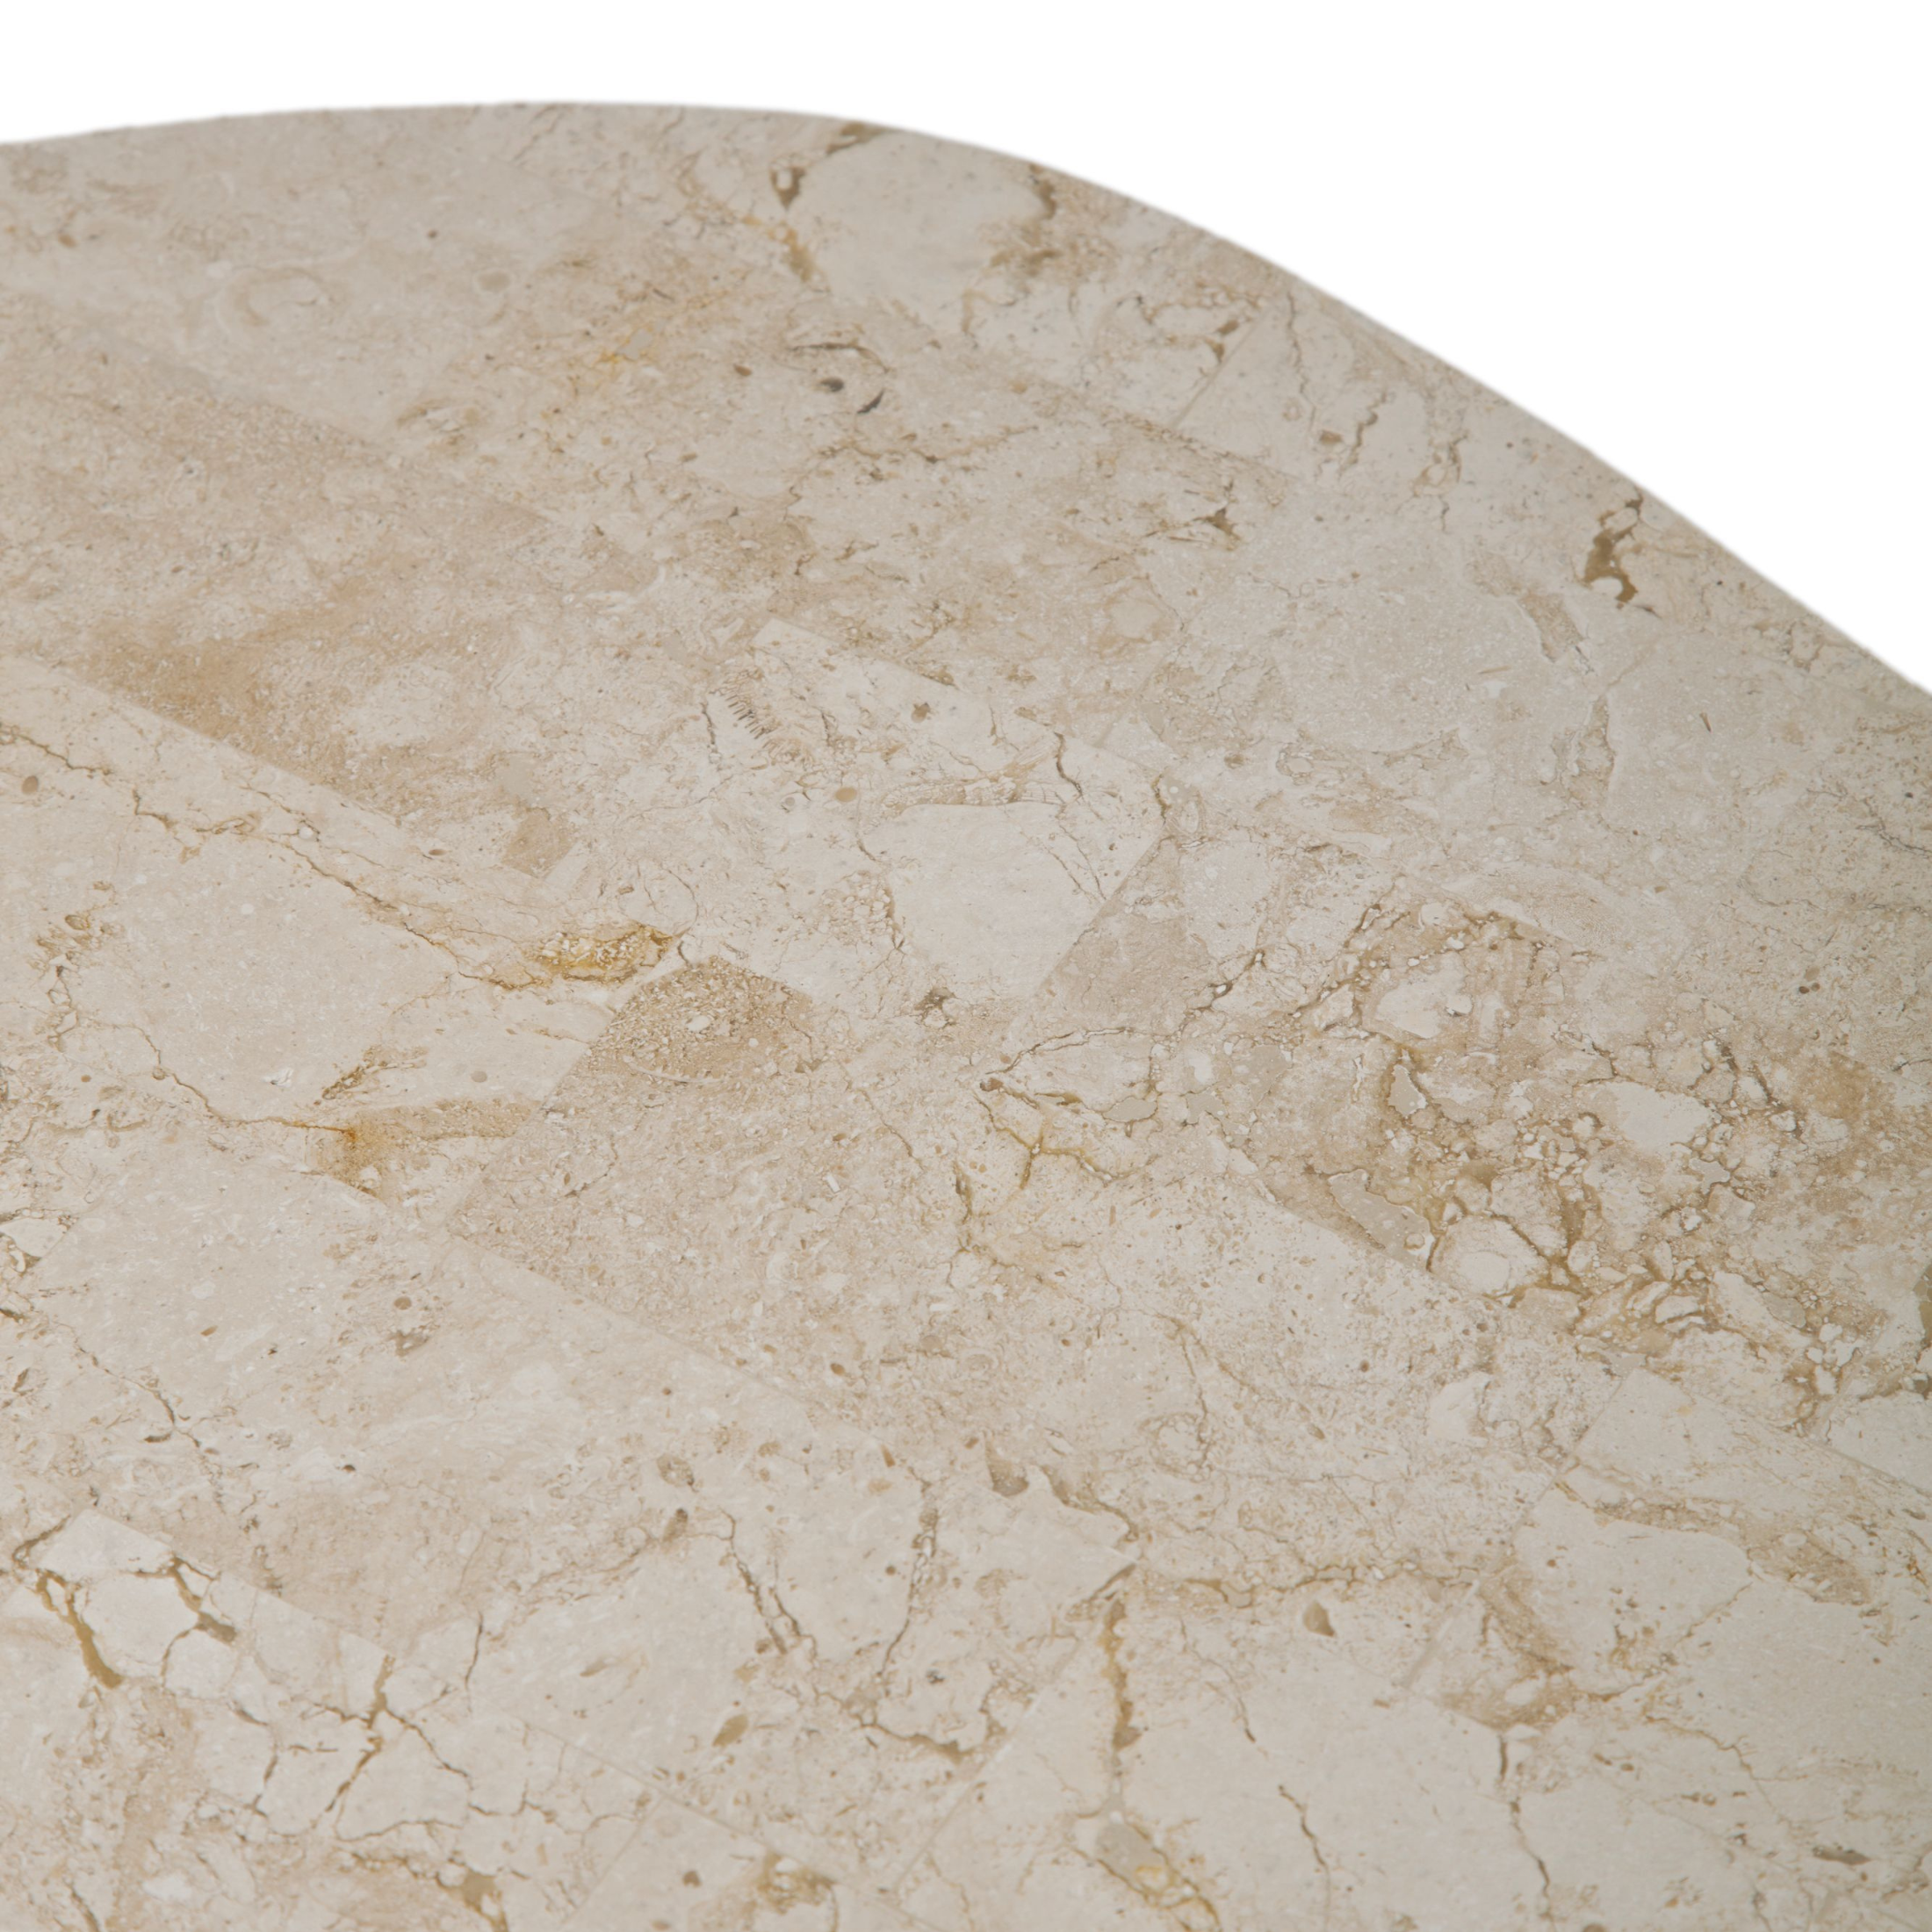 Mesita baja en piedra fósil "Trapezio" mesa de centro 100x52 cm 28h